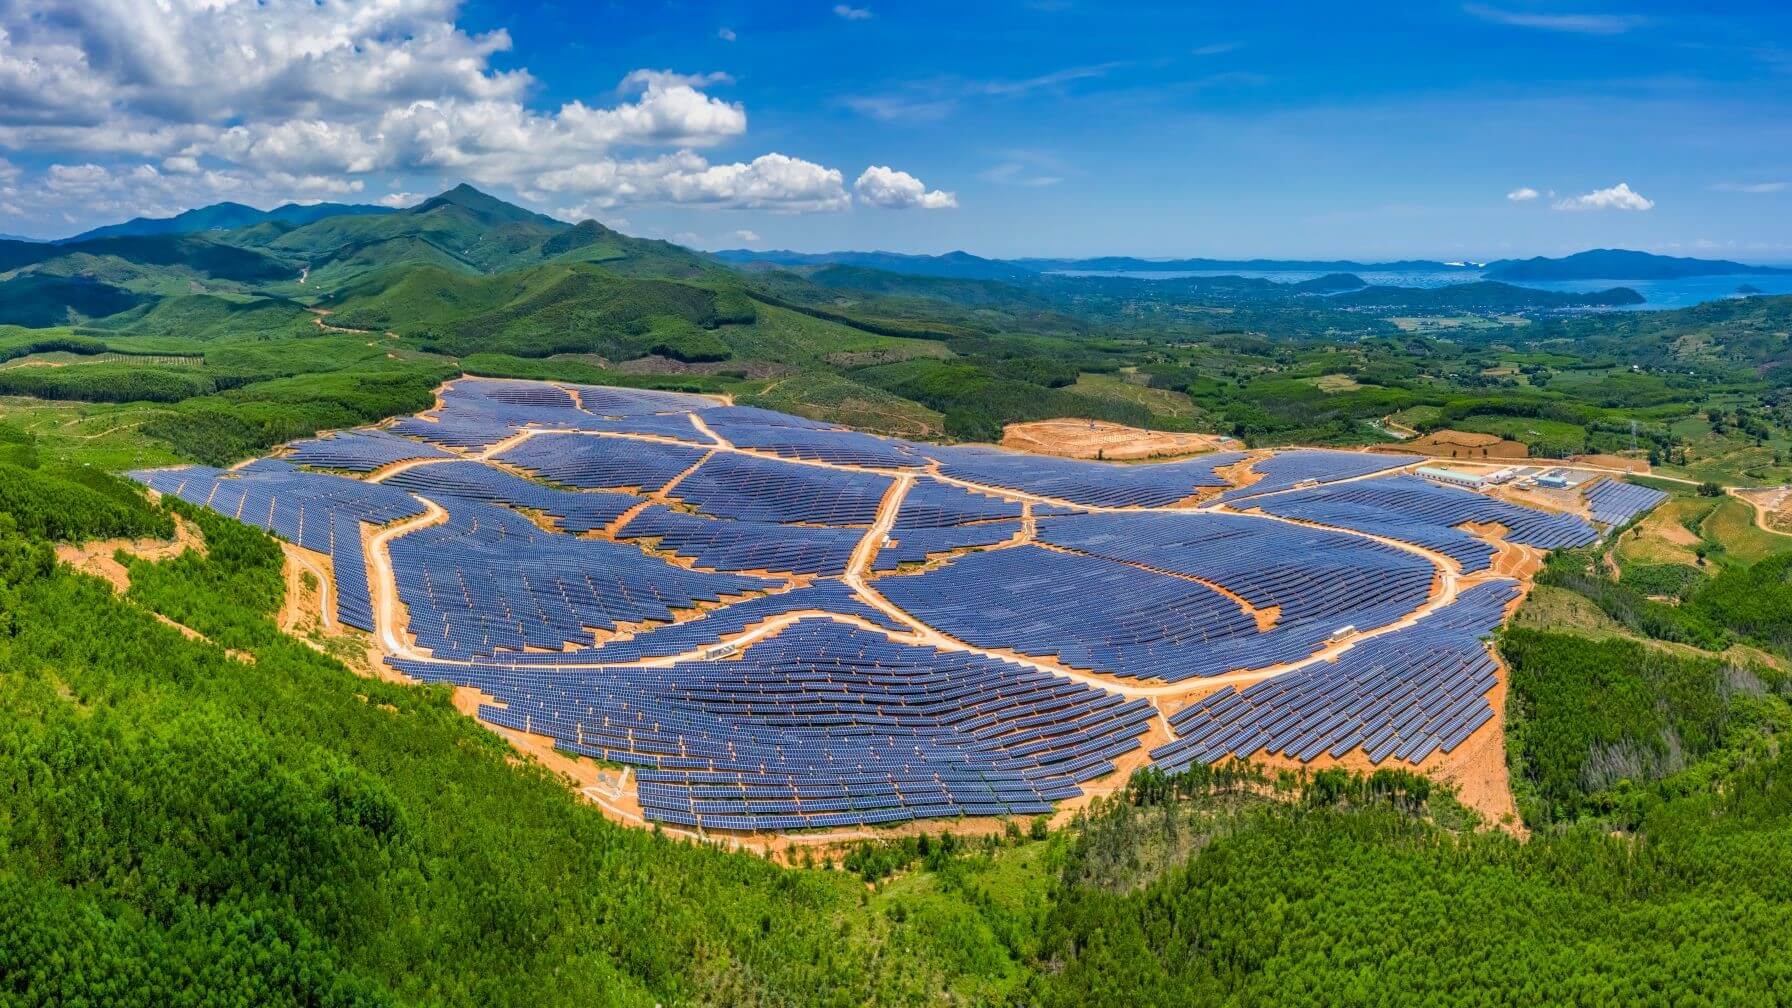 Aerial view of solar farm in Vietnam